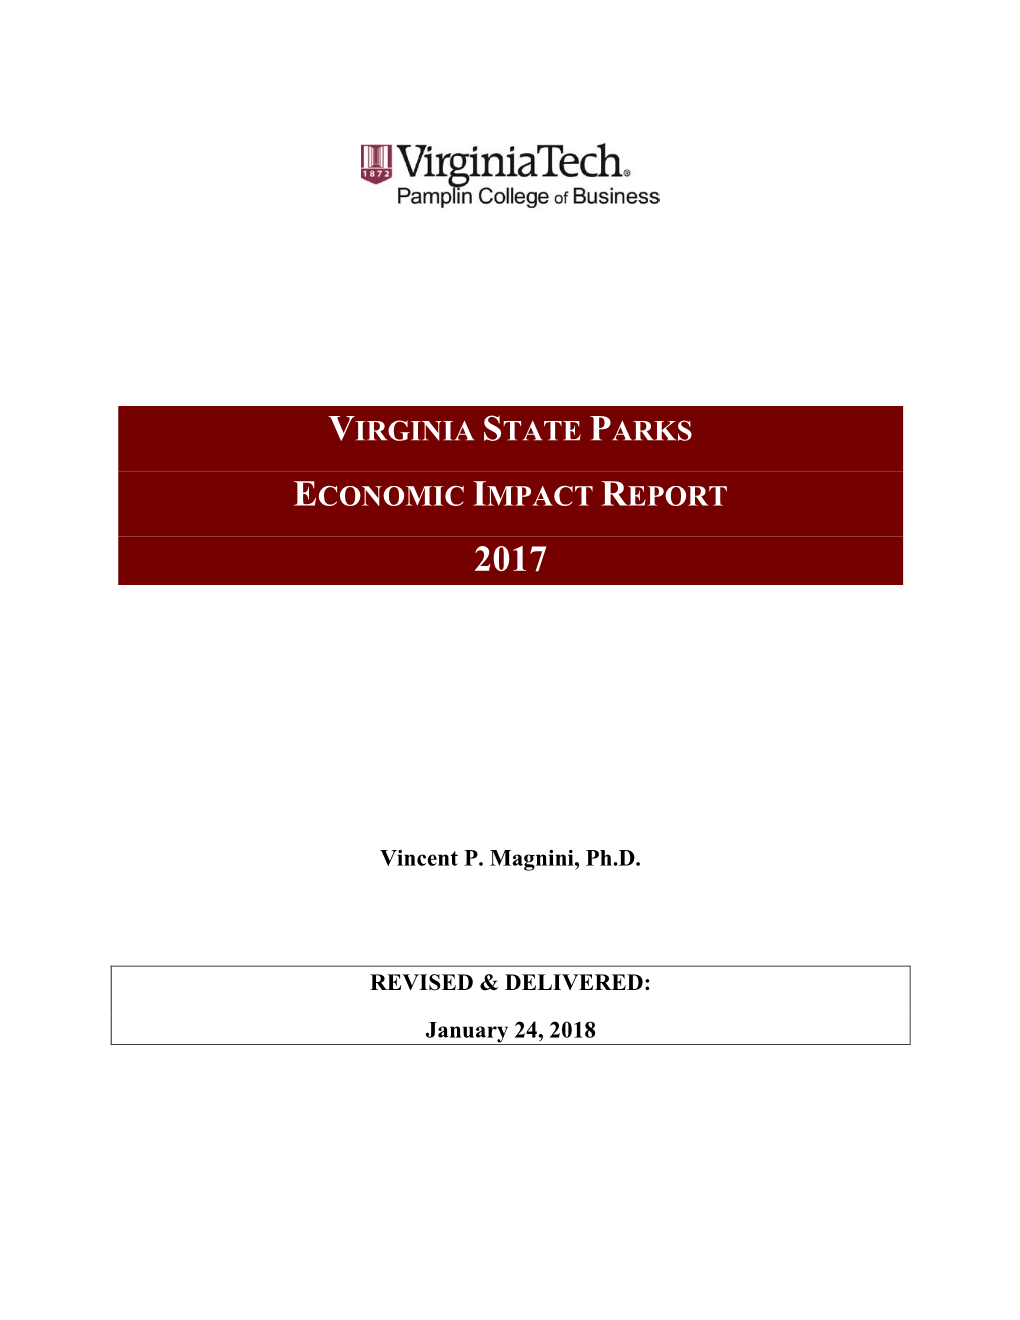 Virginia State Parks 2017 Economic Impact